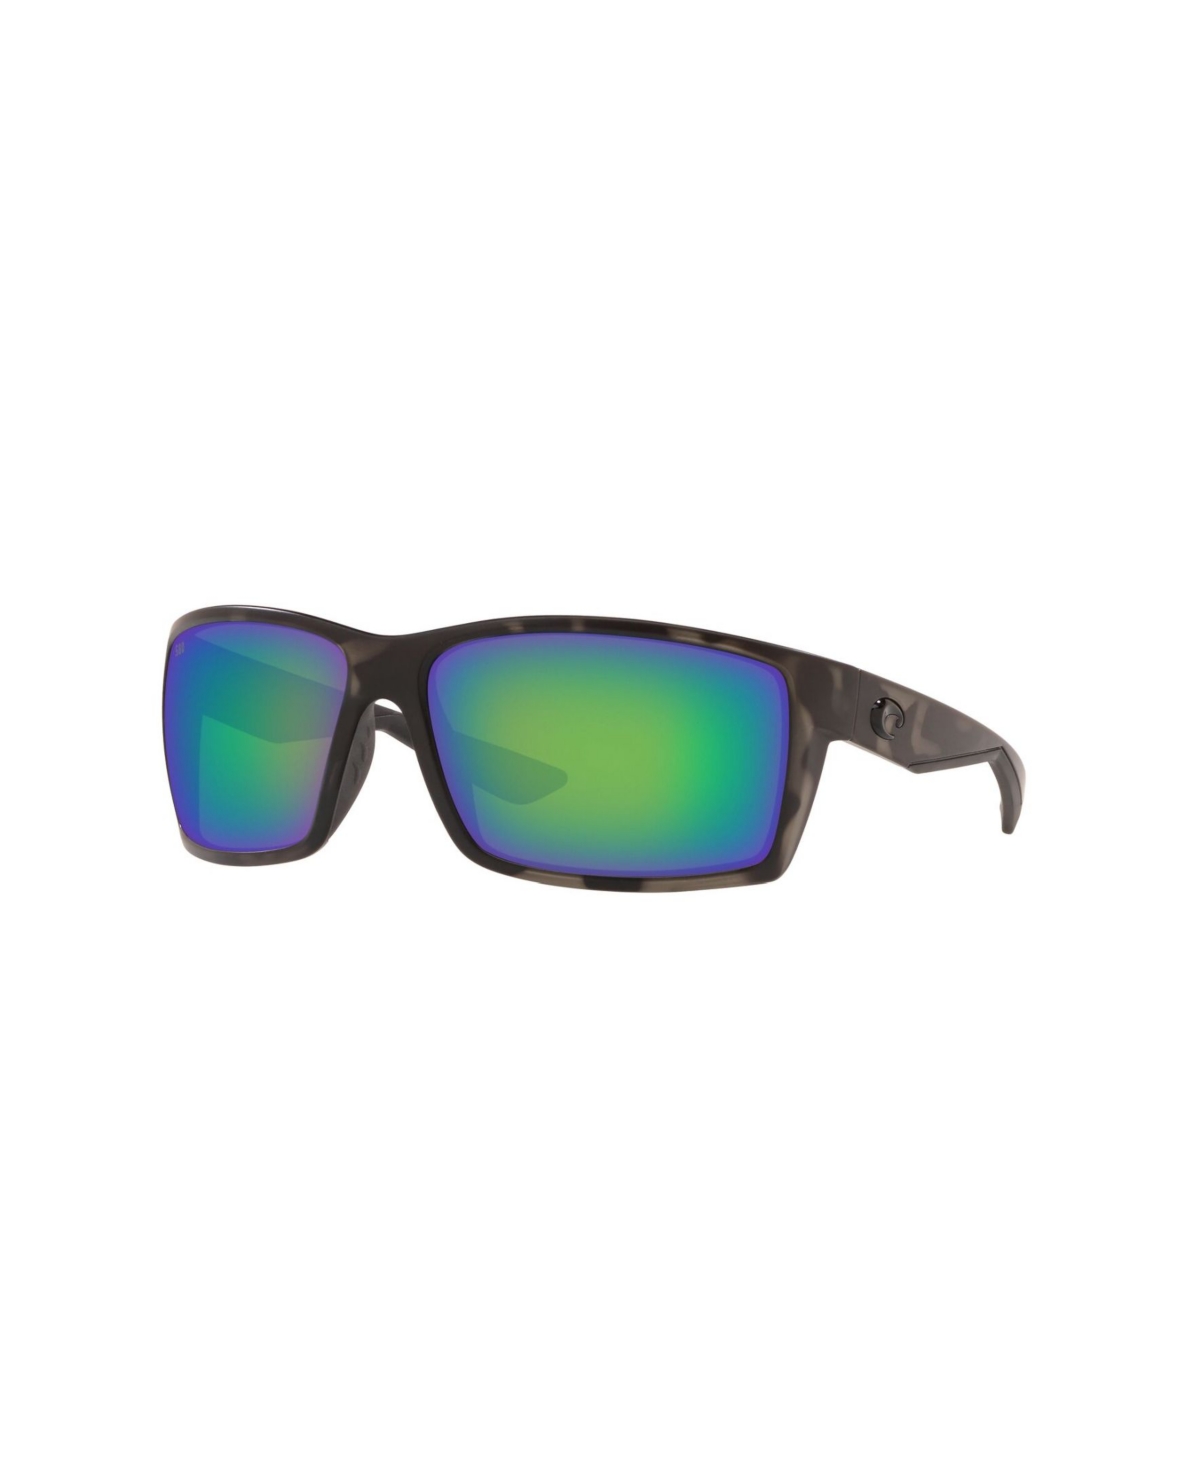 Polarized Sunglasses, 06S9007 - Multi